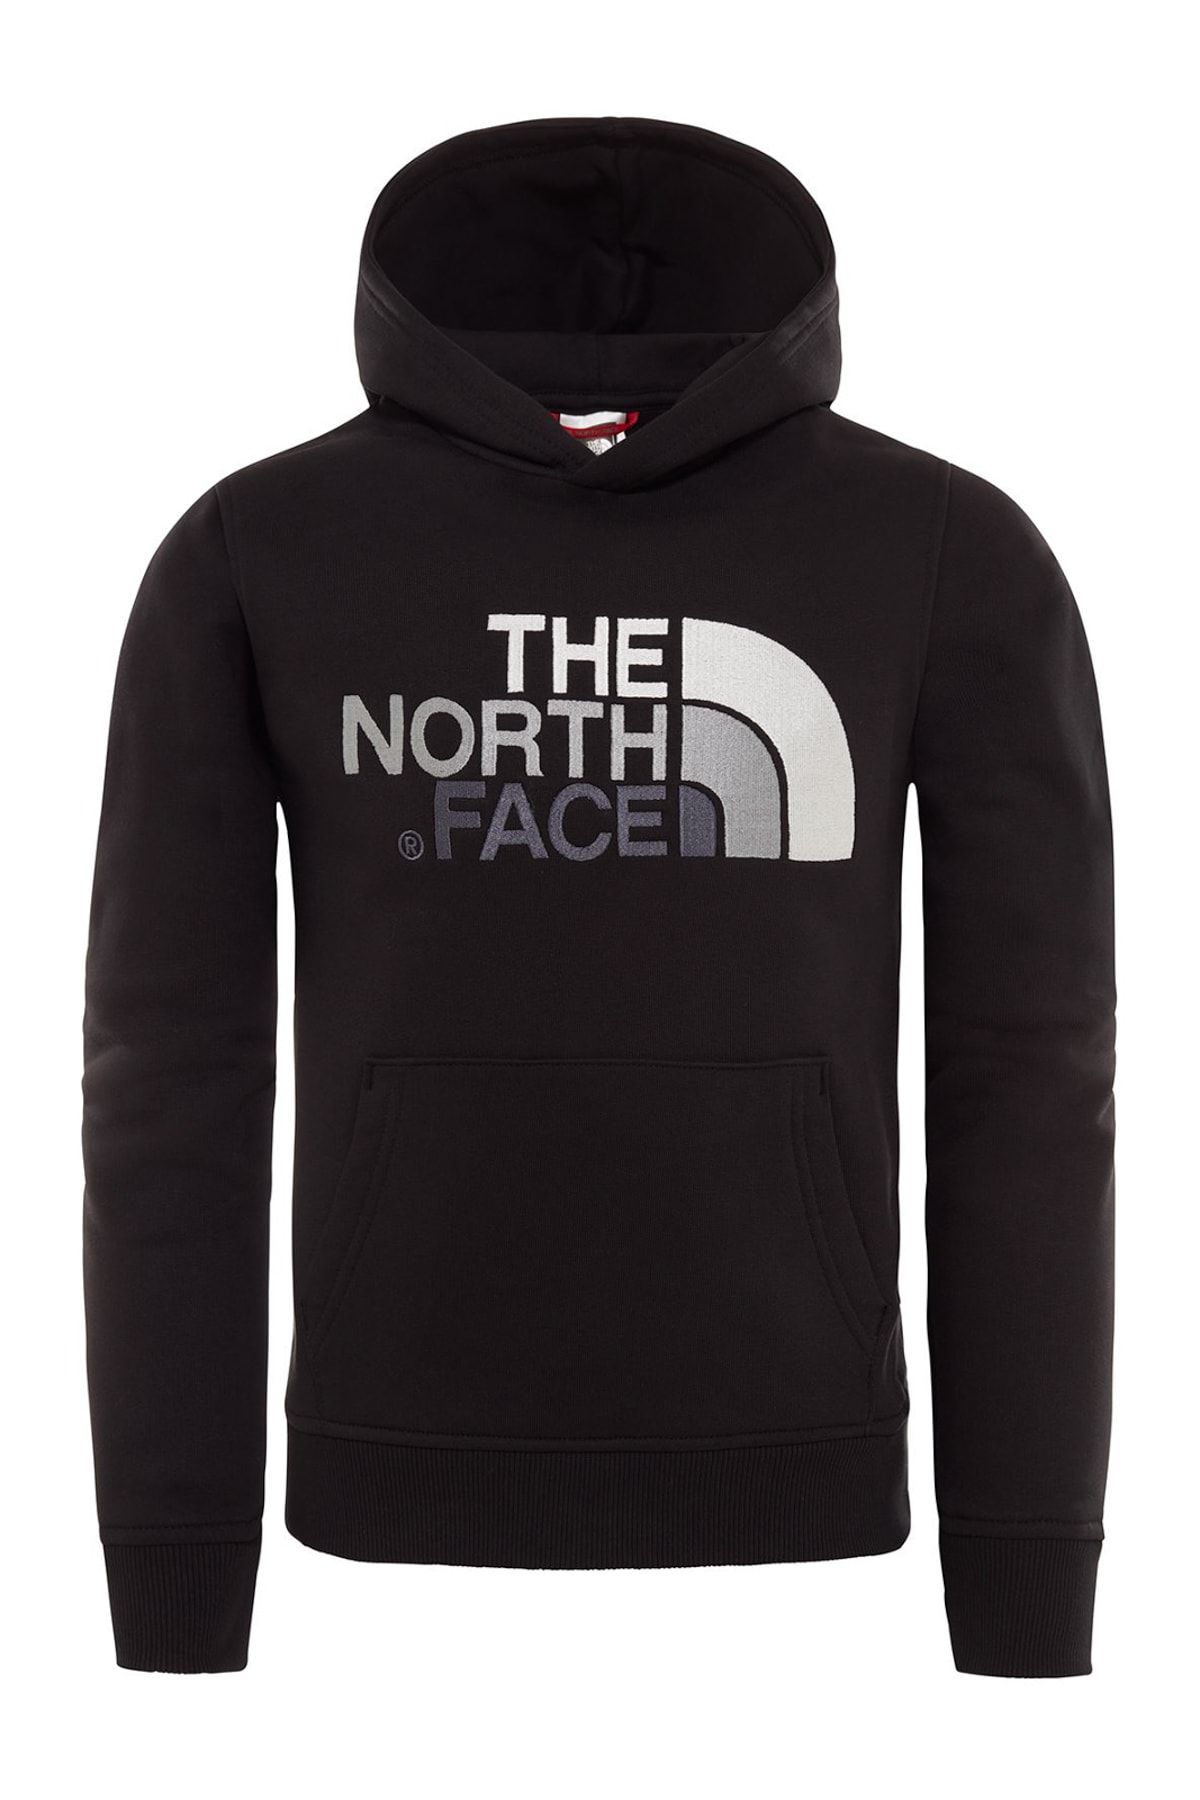 The North Face Siyah Çocuk Sweatshirts T933H4Etr Y Drew Peak Po Hdy